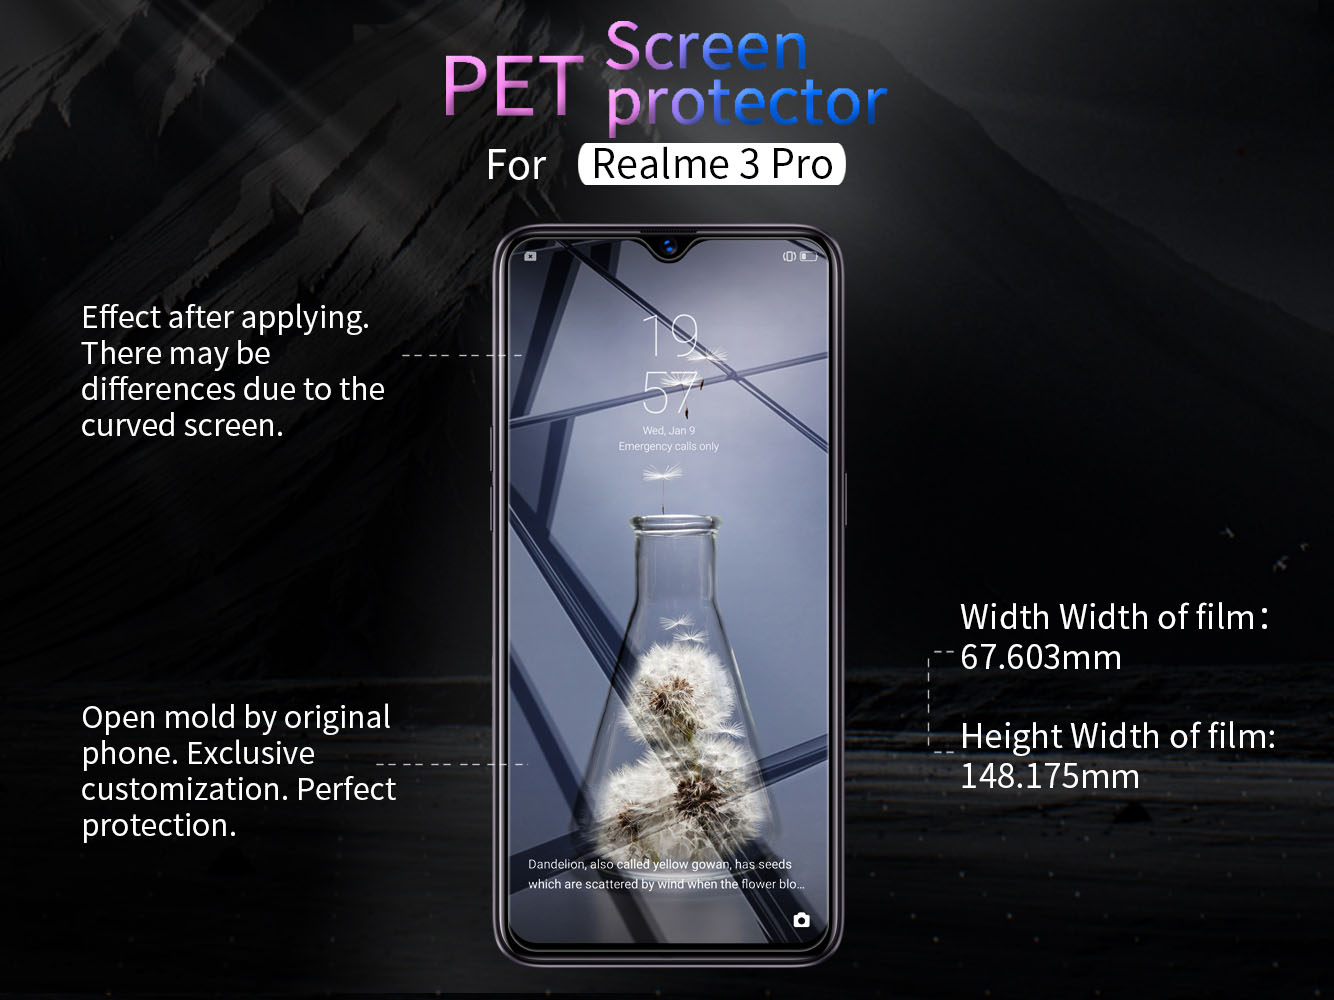 Realme 3 Pro screen protector